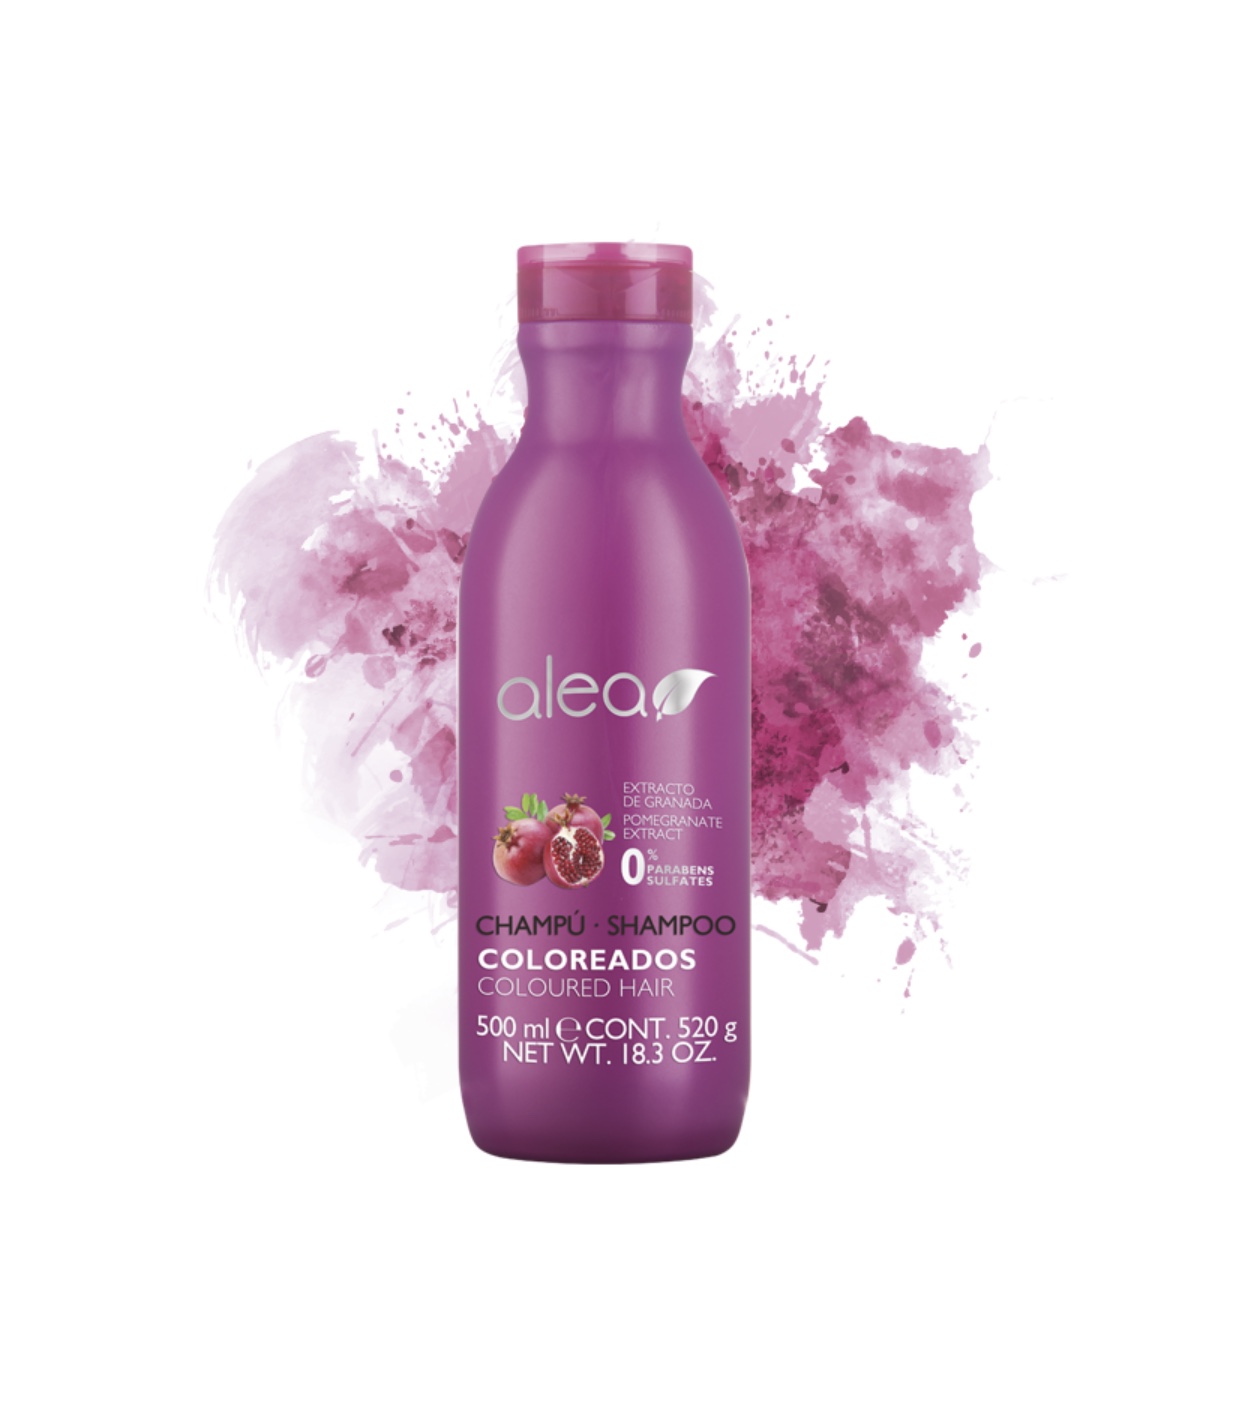 Шампунь hair Pro extract. Soft Shampoo Peart extract шампунь. Шампунь Клер в розовой упаковке. Bendida косметика. Colored hair shampoo